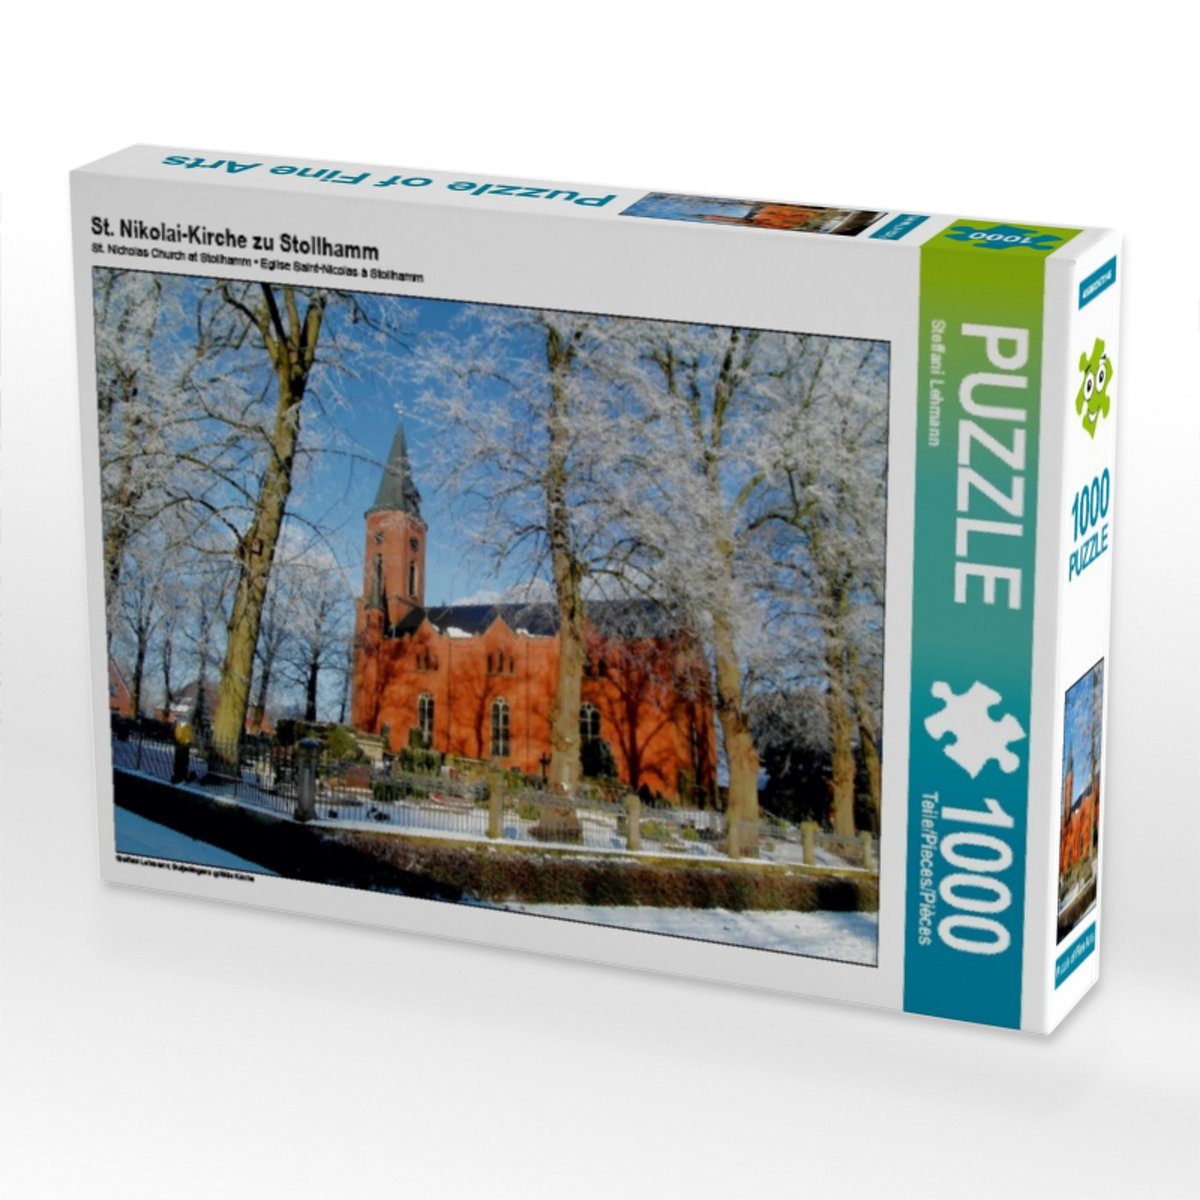 64 1000 Bild Puzzle CALVENDO Puzzleteile Steffani x Teile zu Nikolai-Kirche CALVENDO von Lehmann, Puzzle 1000 St. Stollhamm Lege-Größe 48 cm Foto-Puzzle